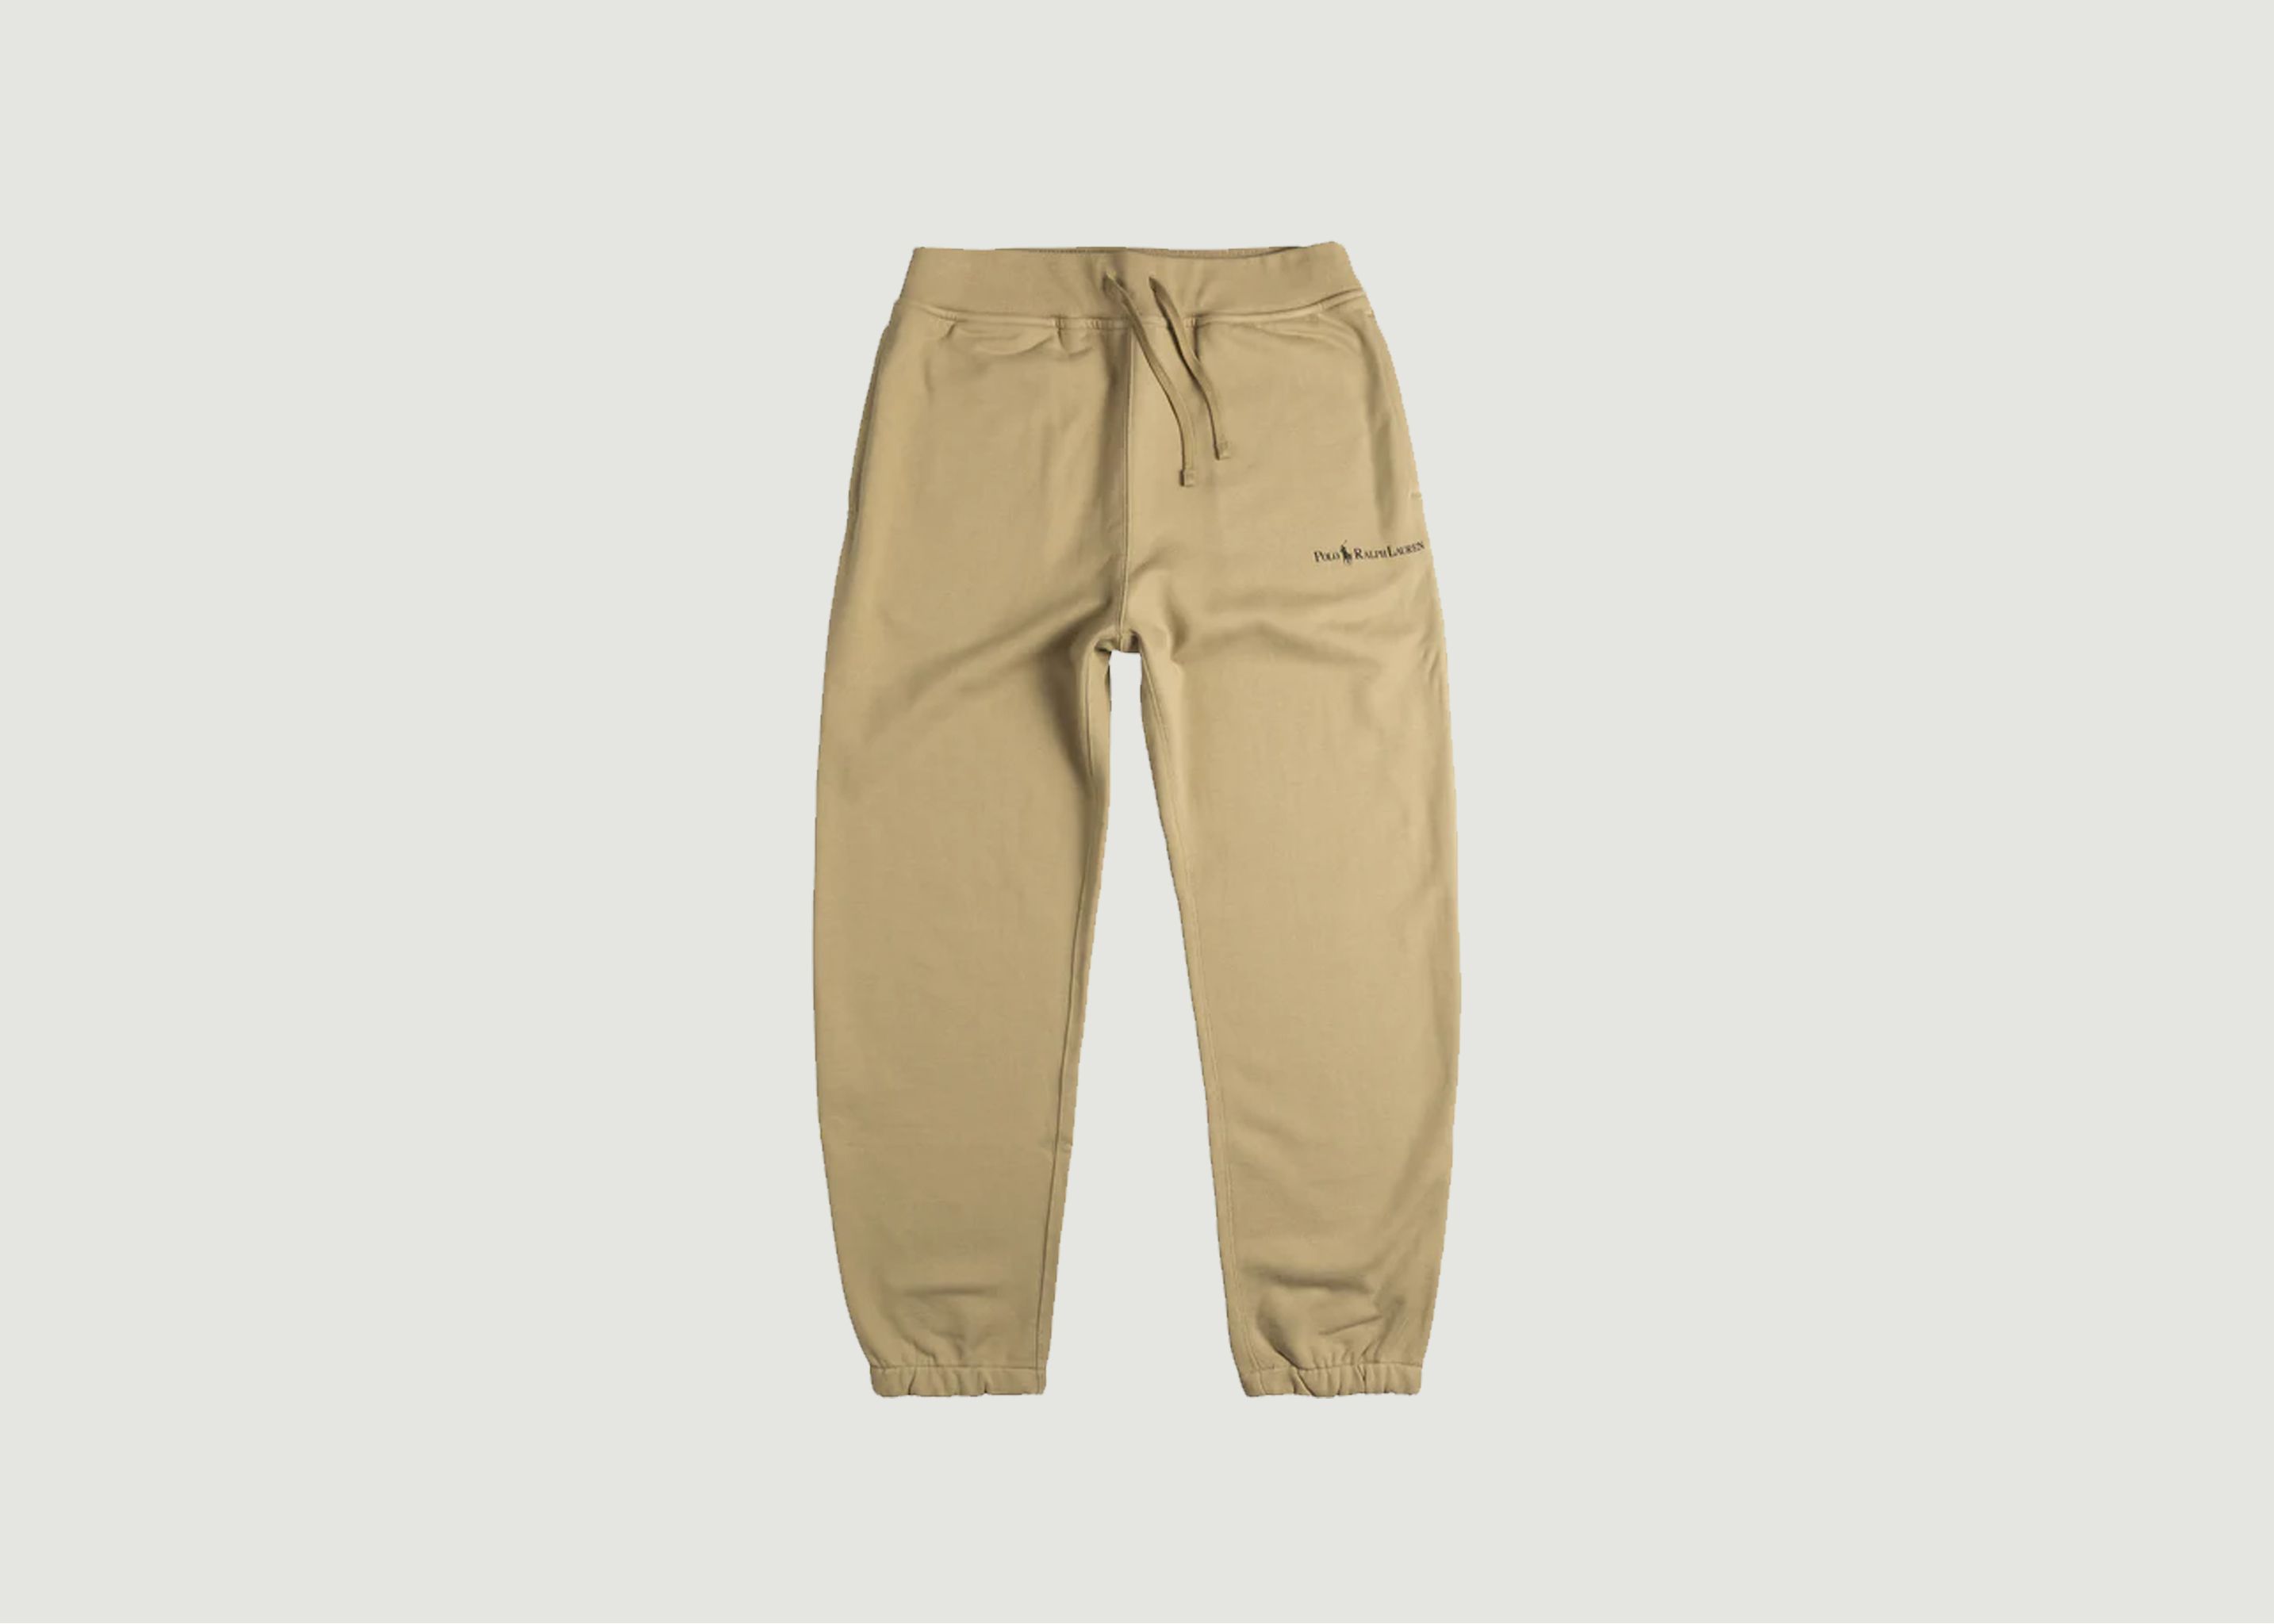 Jogging pants  - Polo Ralph Lauren